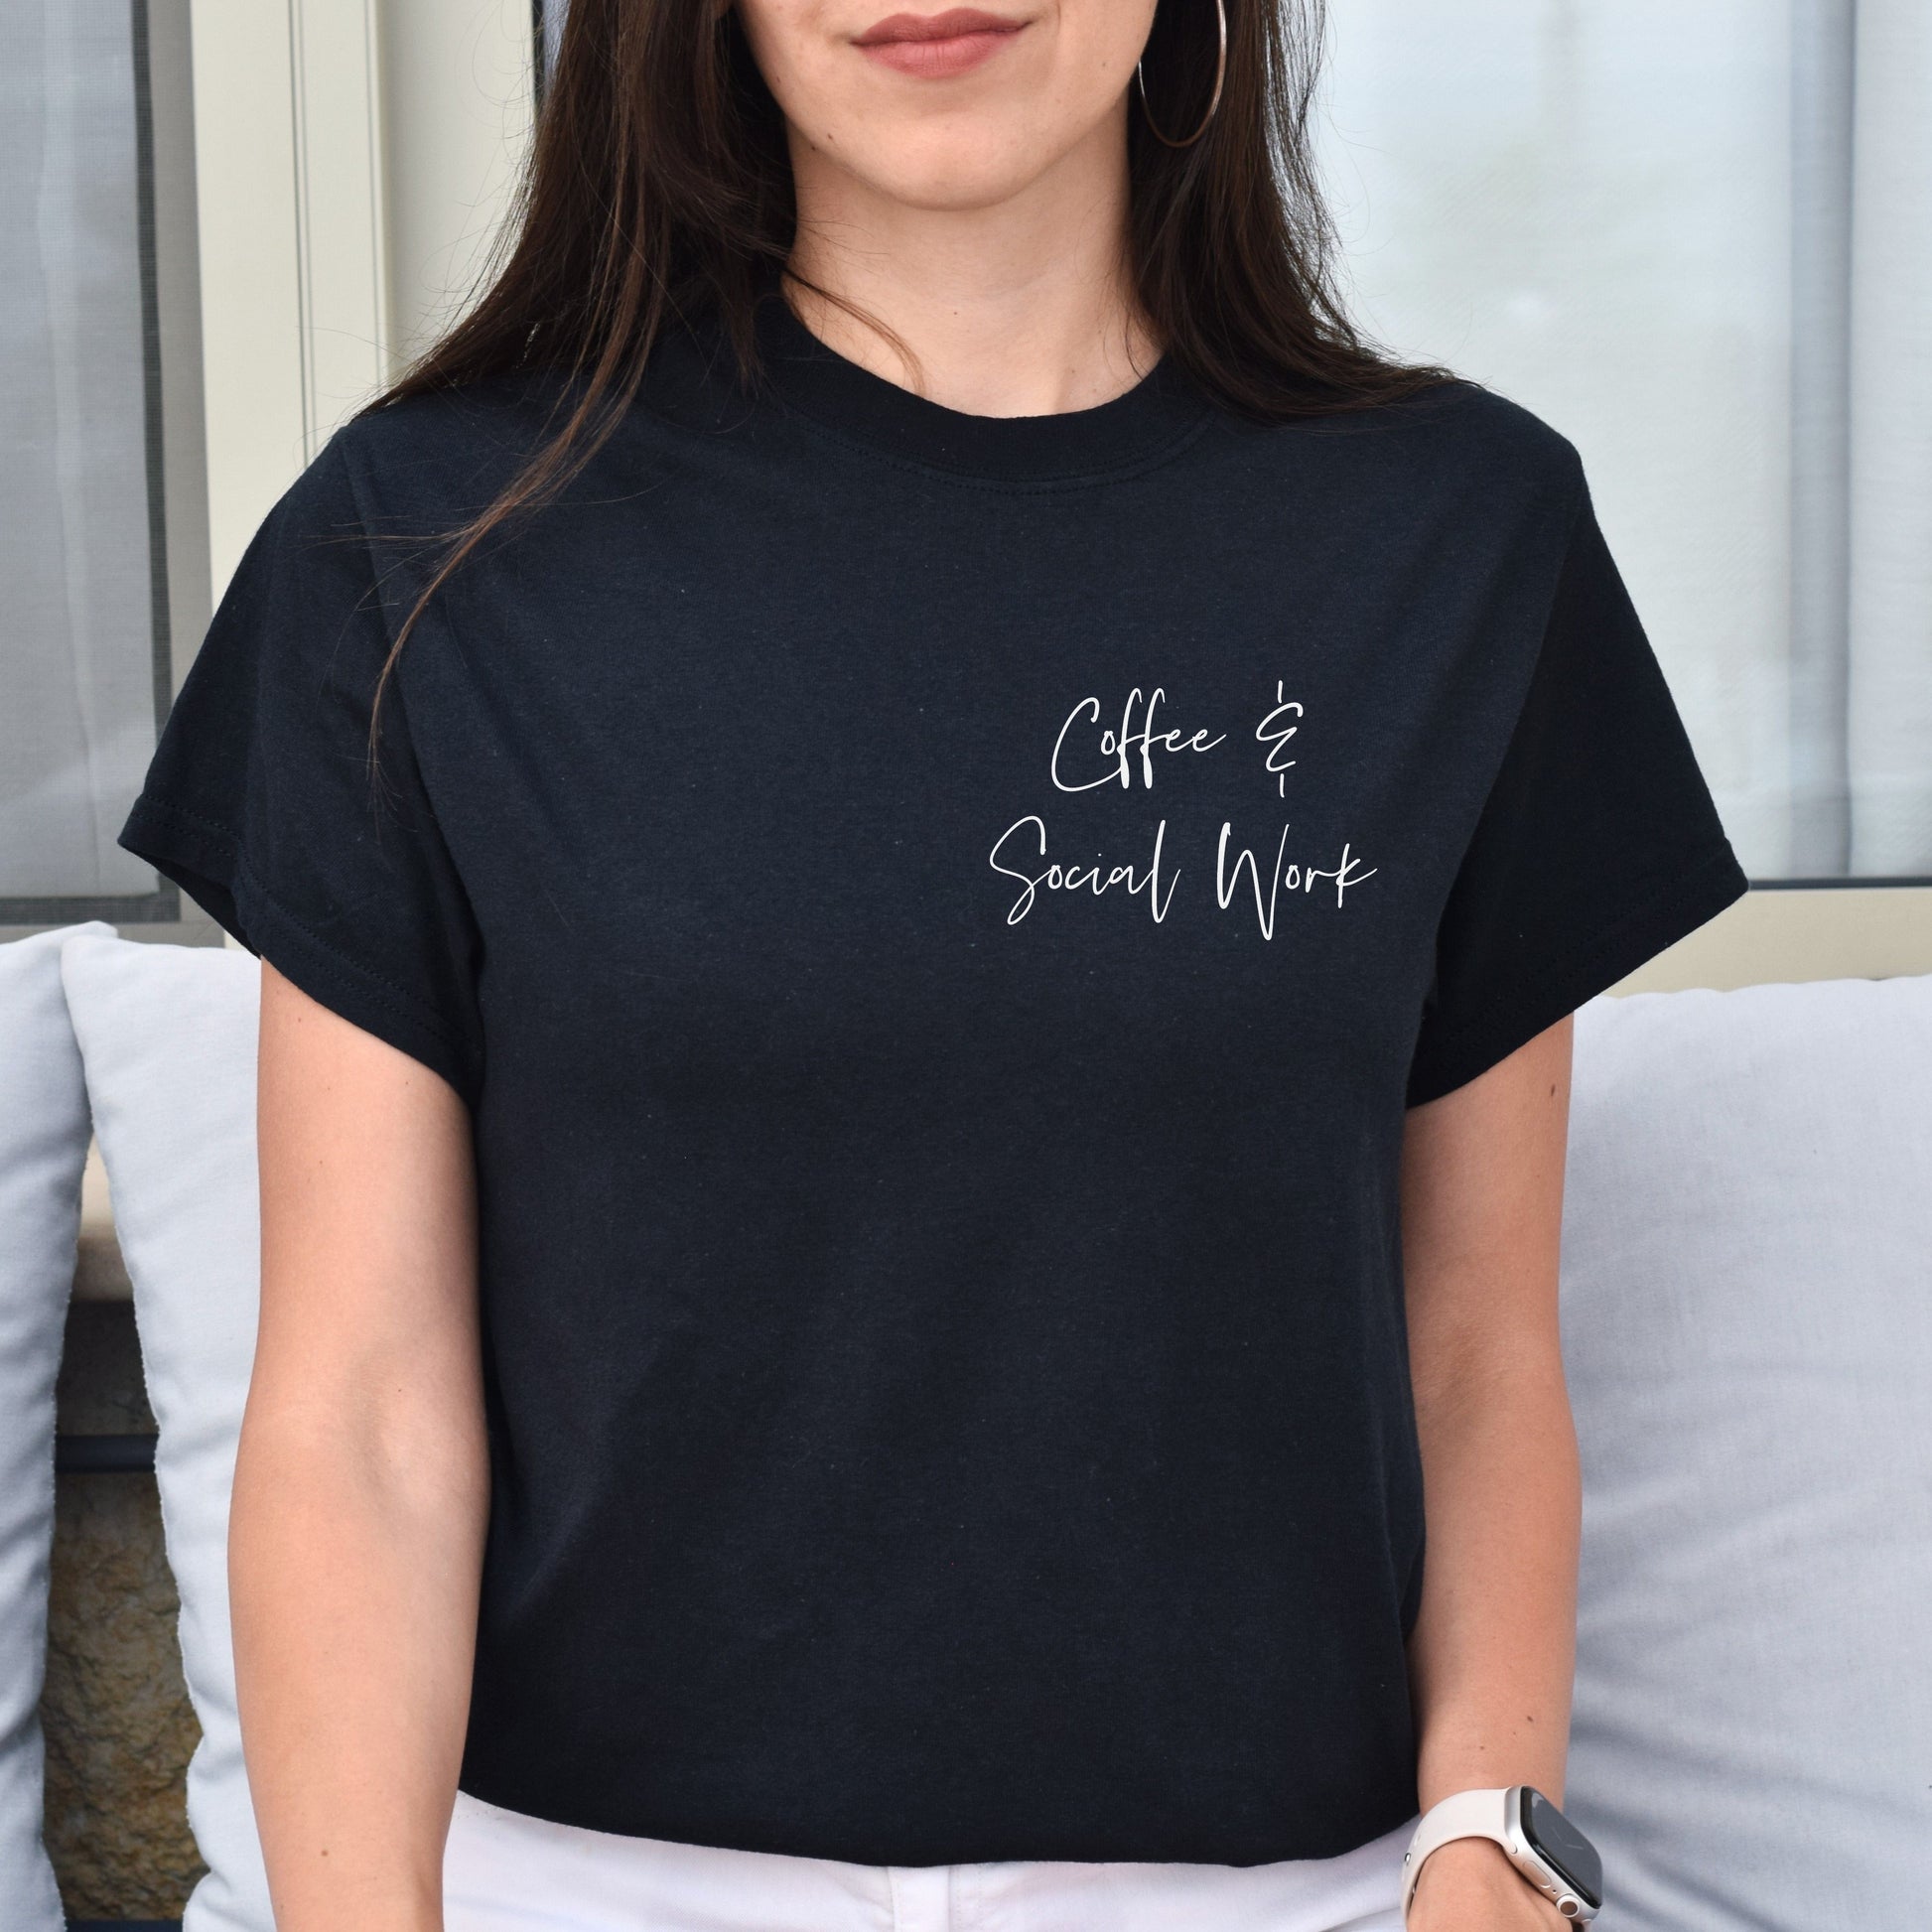 Coffee and Social work pocket Unisex T-shirt social worker tee Black Navy Dark Heather-Black-Family-Gift-Planet